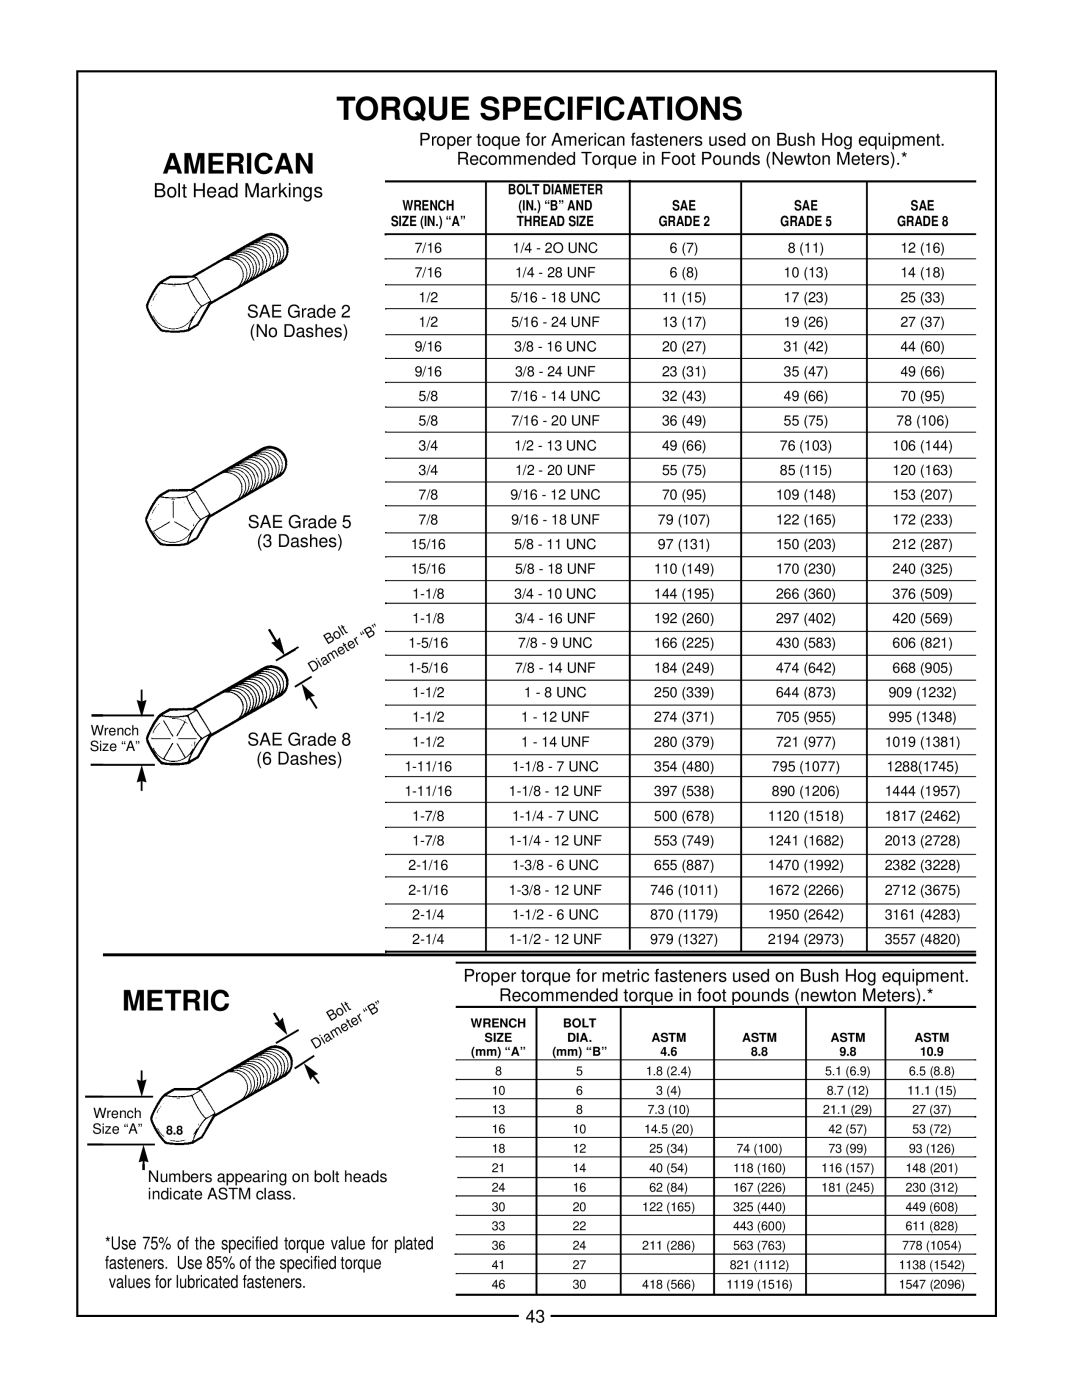 Bush Hog 3860 QT manual Torque Specifications, American, Metric, Bolt Head Markings 